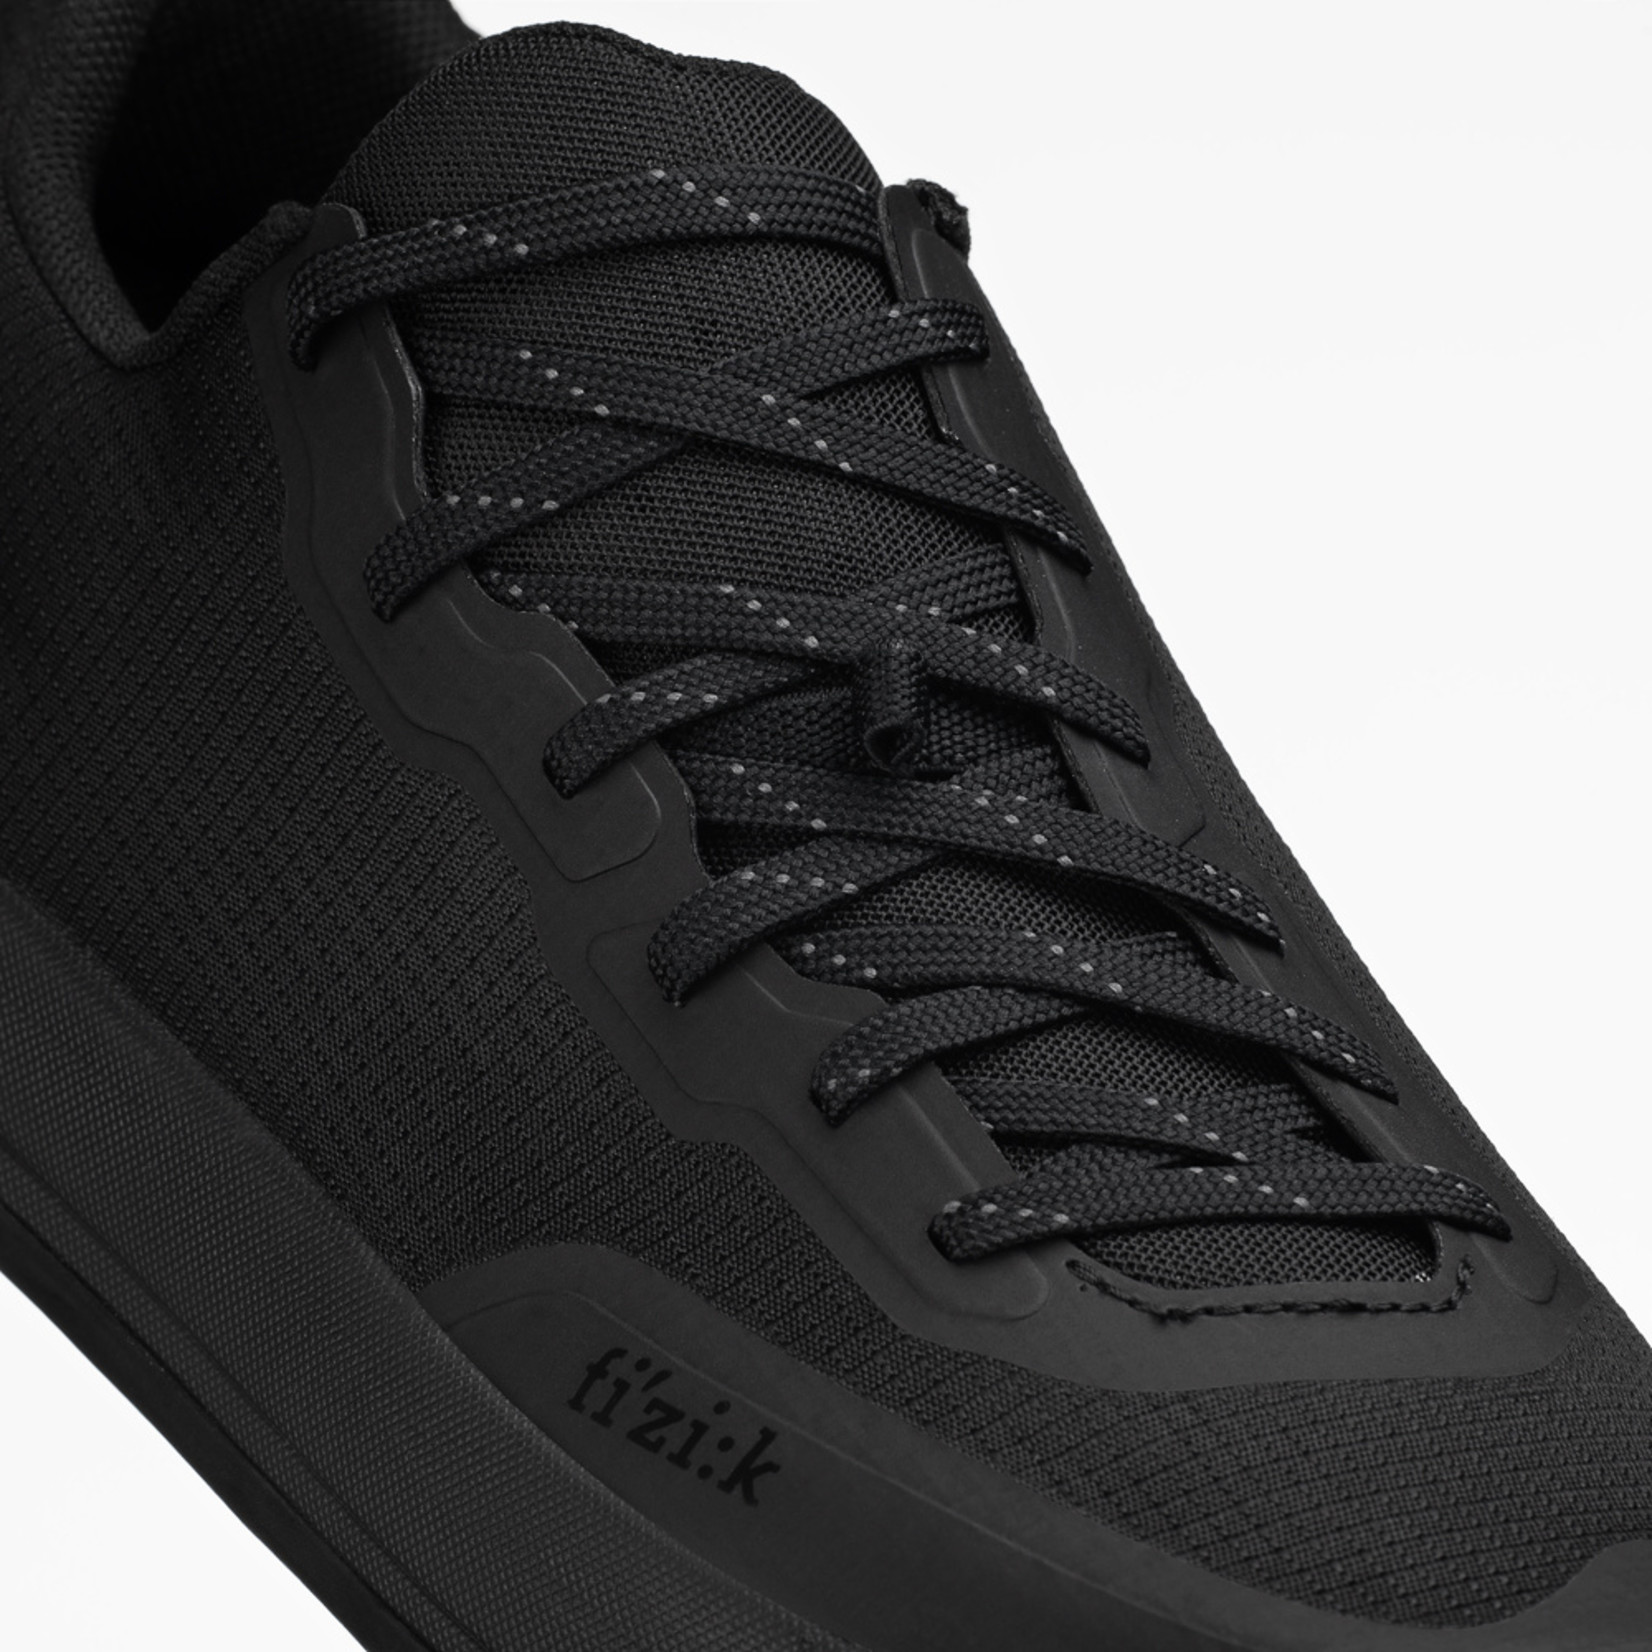 Fizik Fizik Gravita Versor Shoes - Black Synthetic -Ripstop Fabric Upper